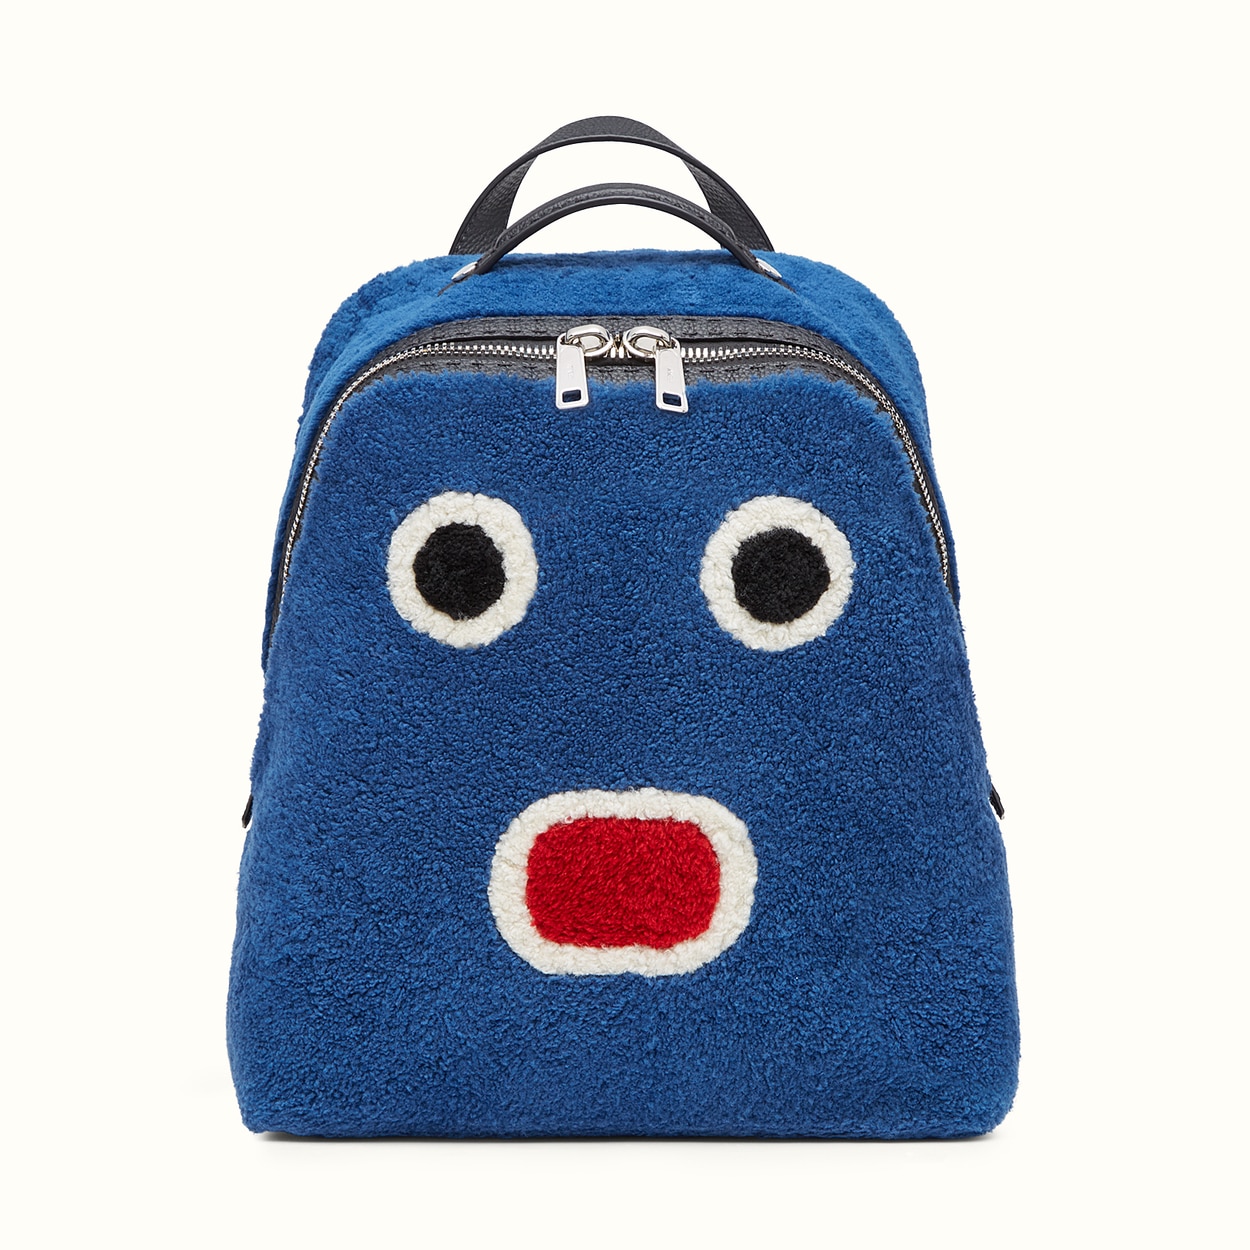 fendi face backpack